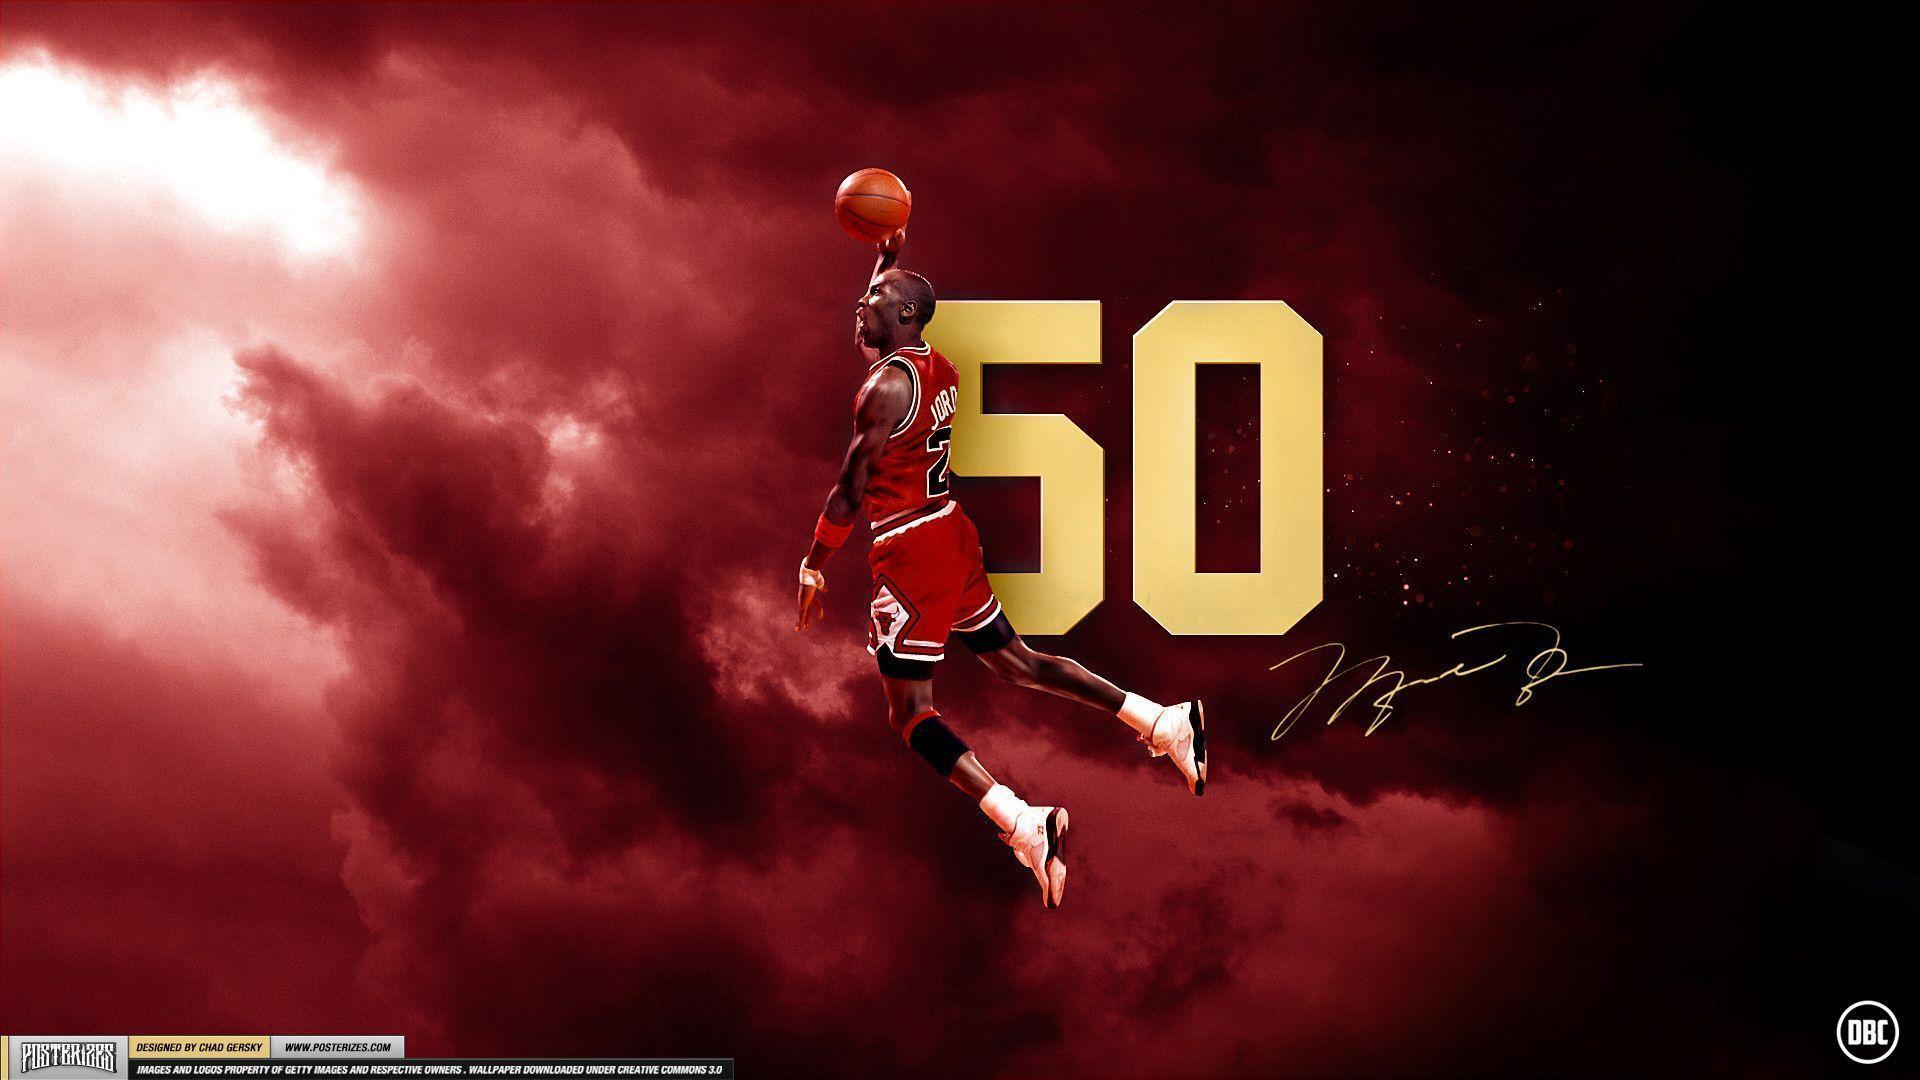 Michael Jordan Wallpaper HD Hd Widescreen 10 HD Wallpaper. Hdimges